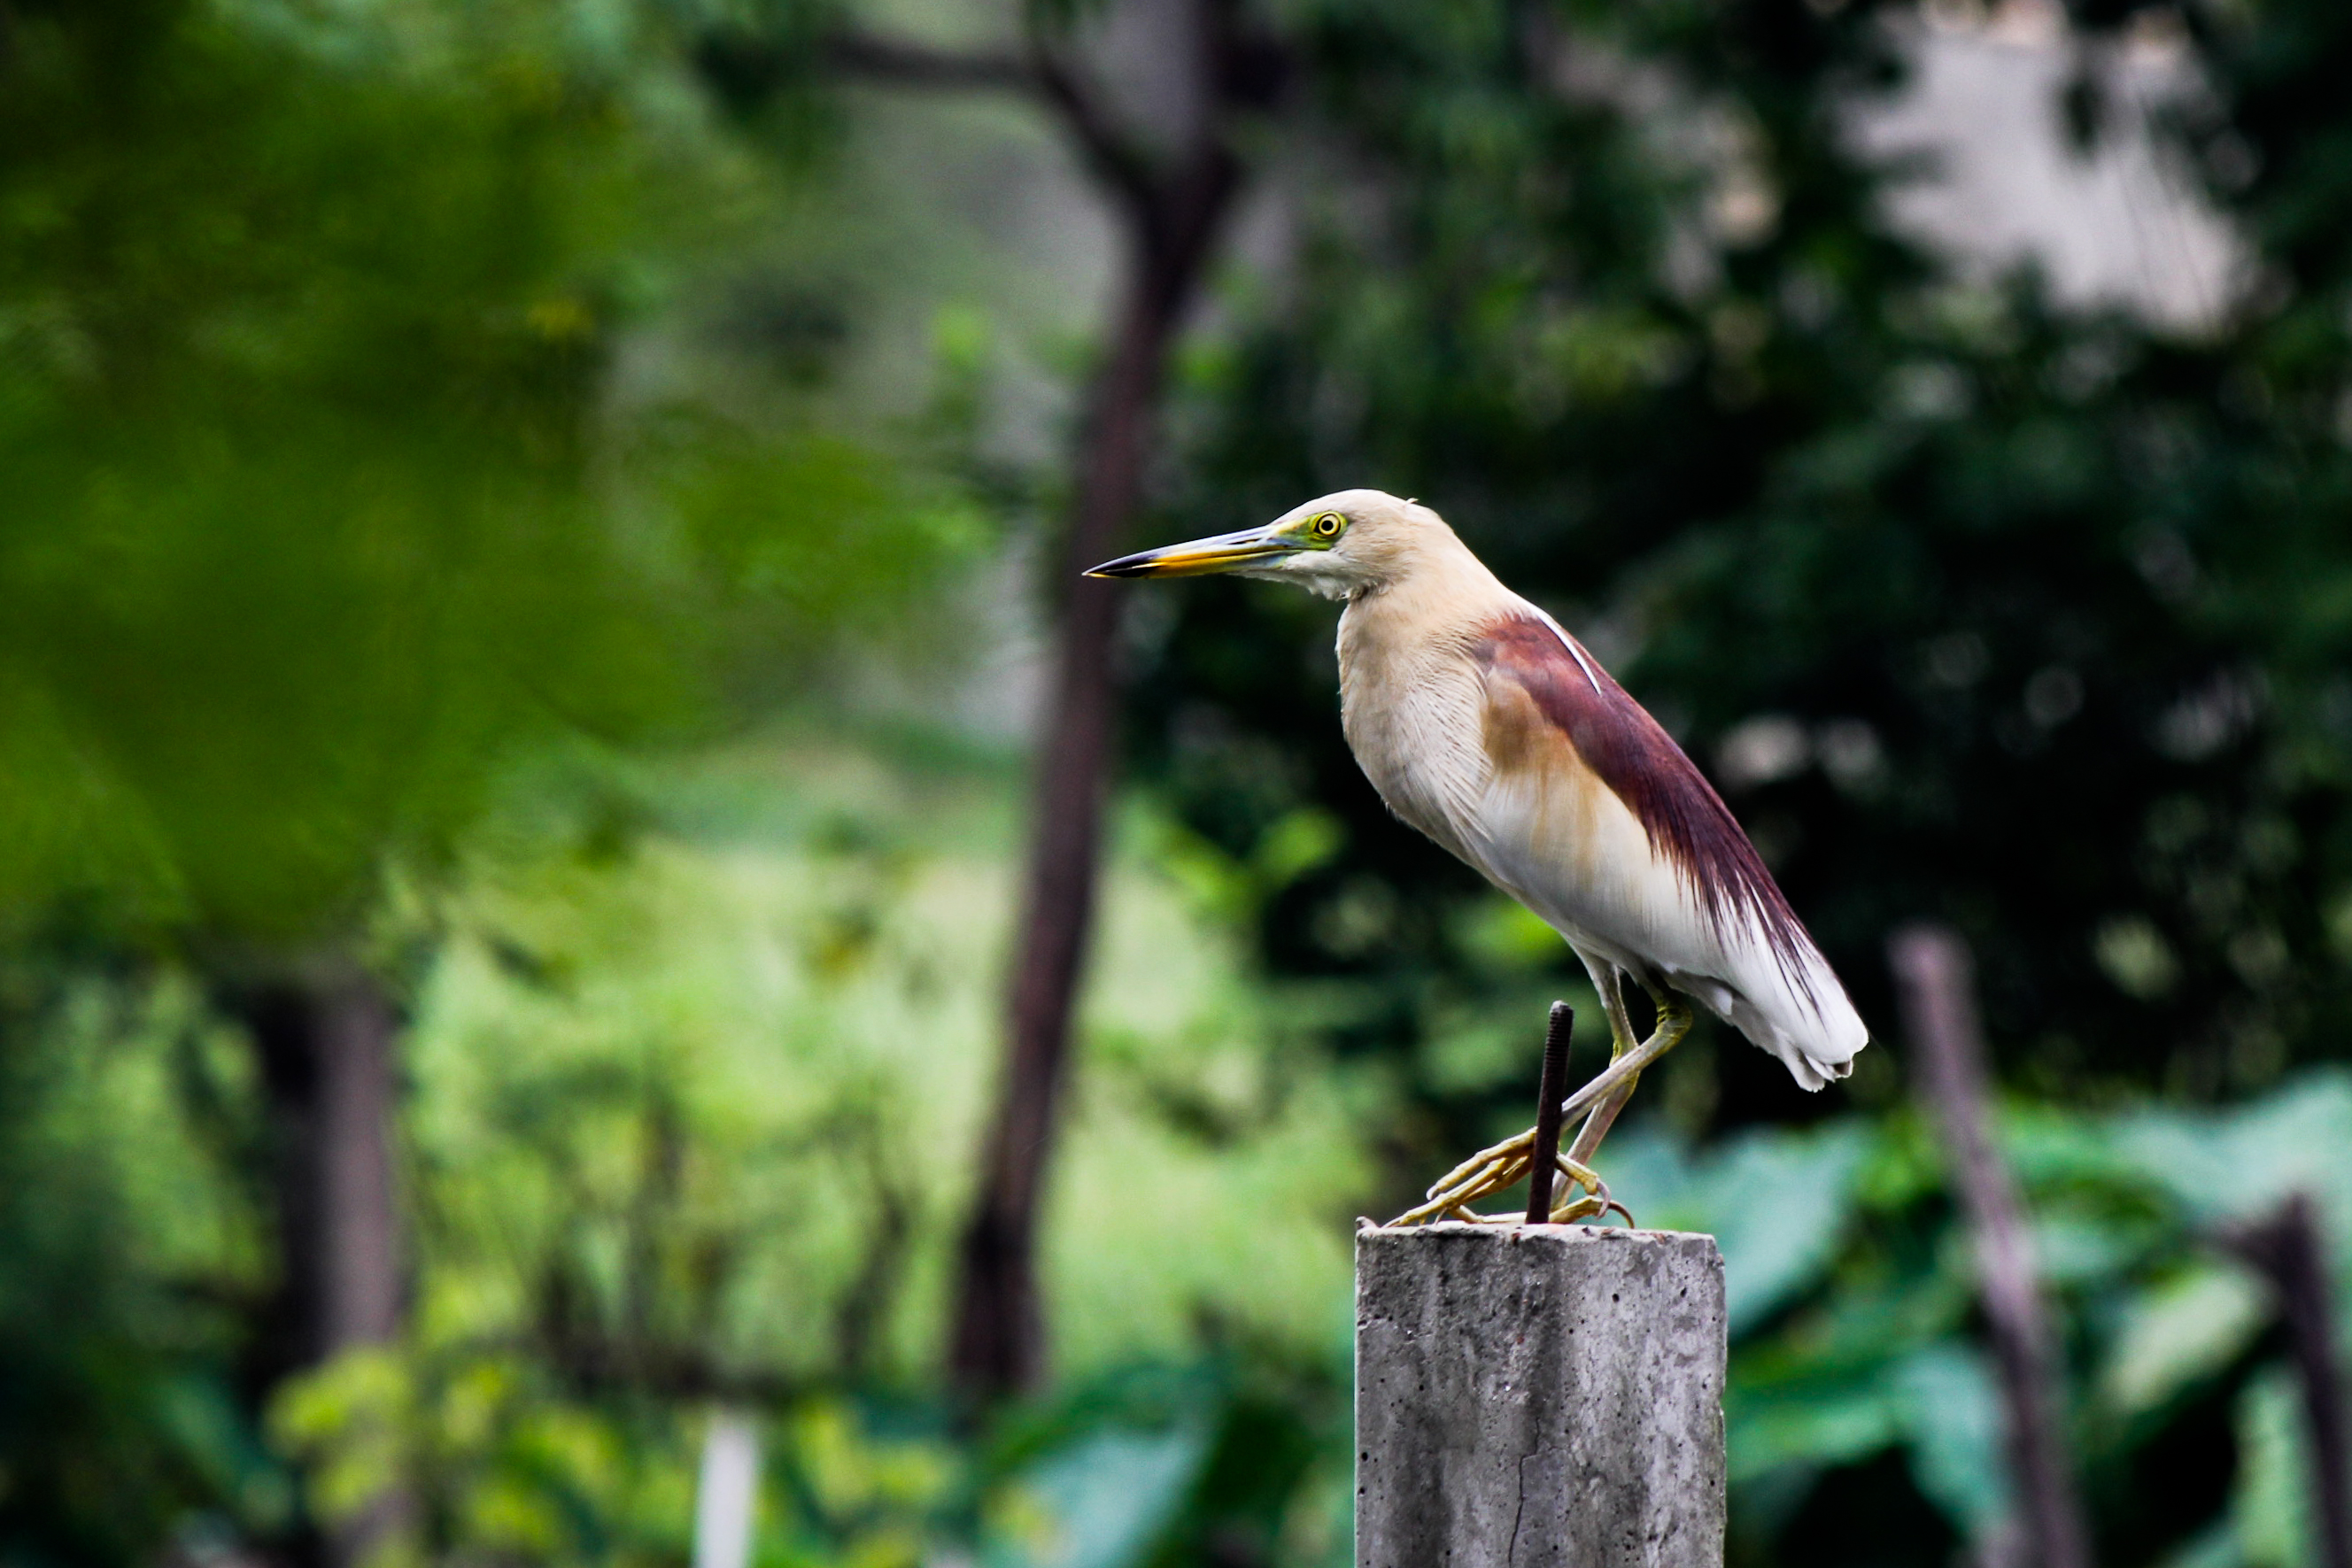 Pond Heron (Ardeola grayii) at Narayanganj, Bangladesh